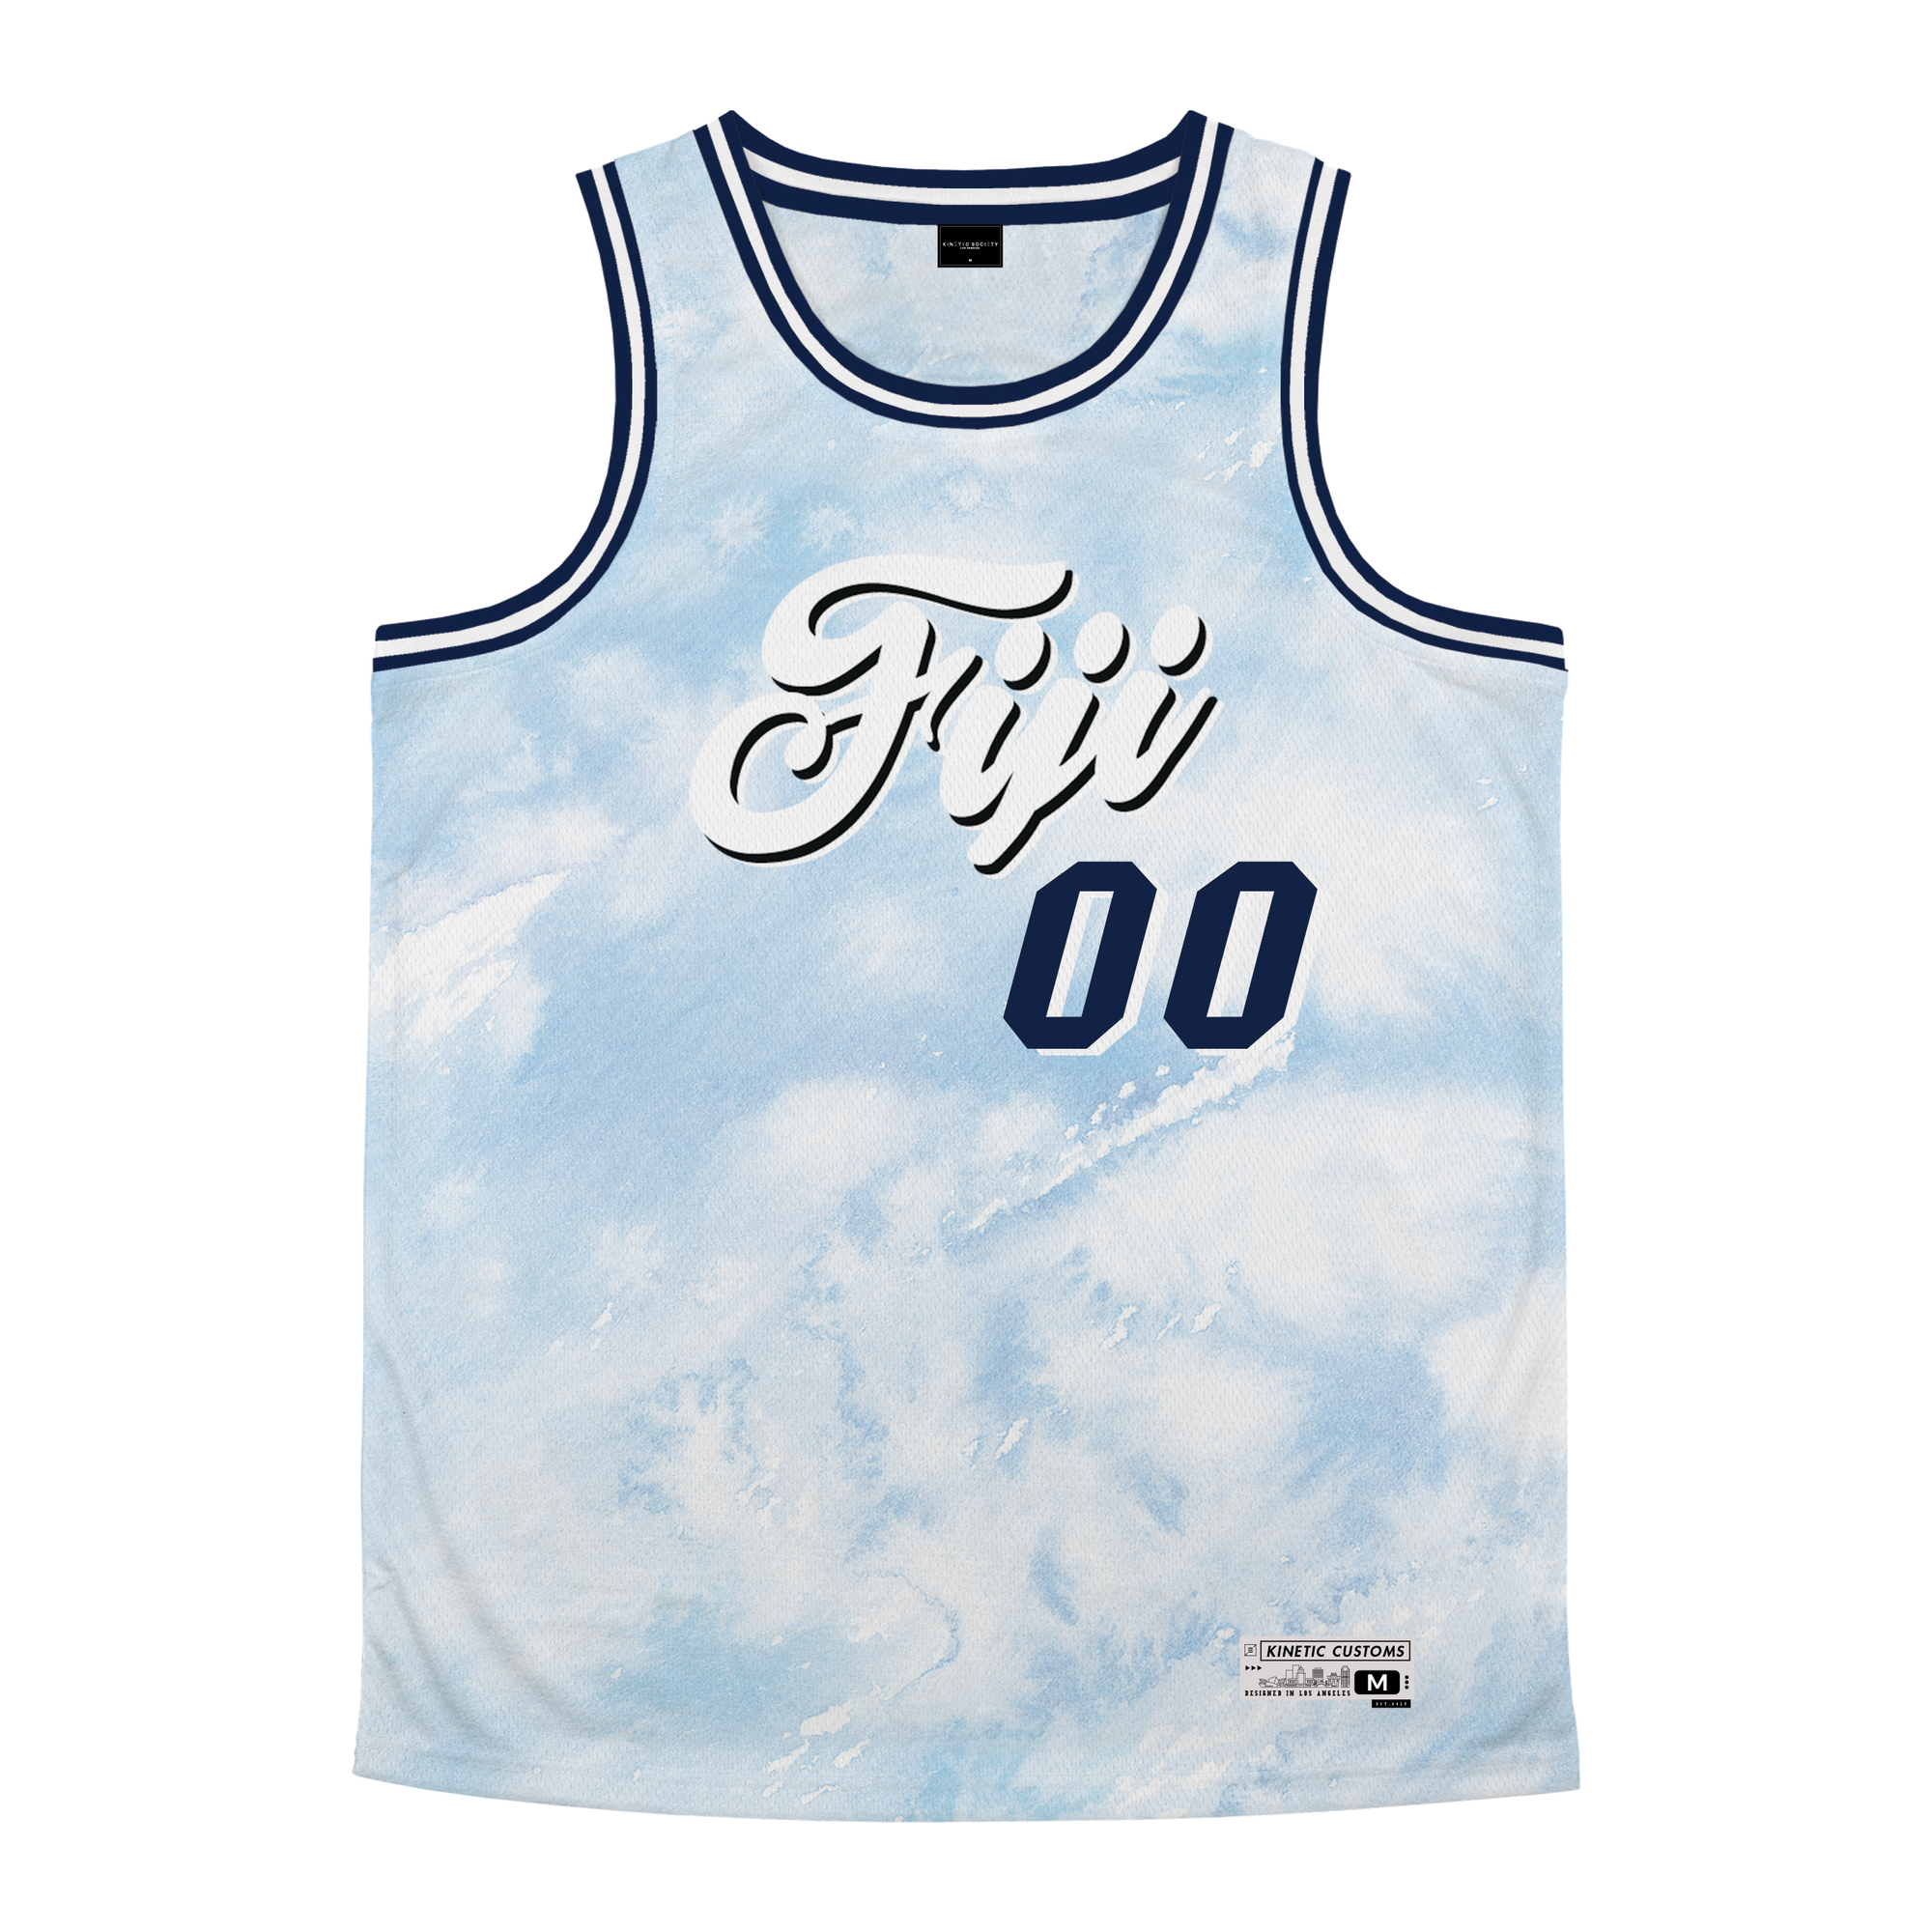 Phi Gamma Delta - Blue Sky Basketball Jersey